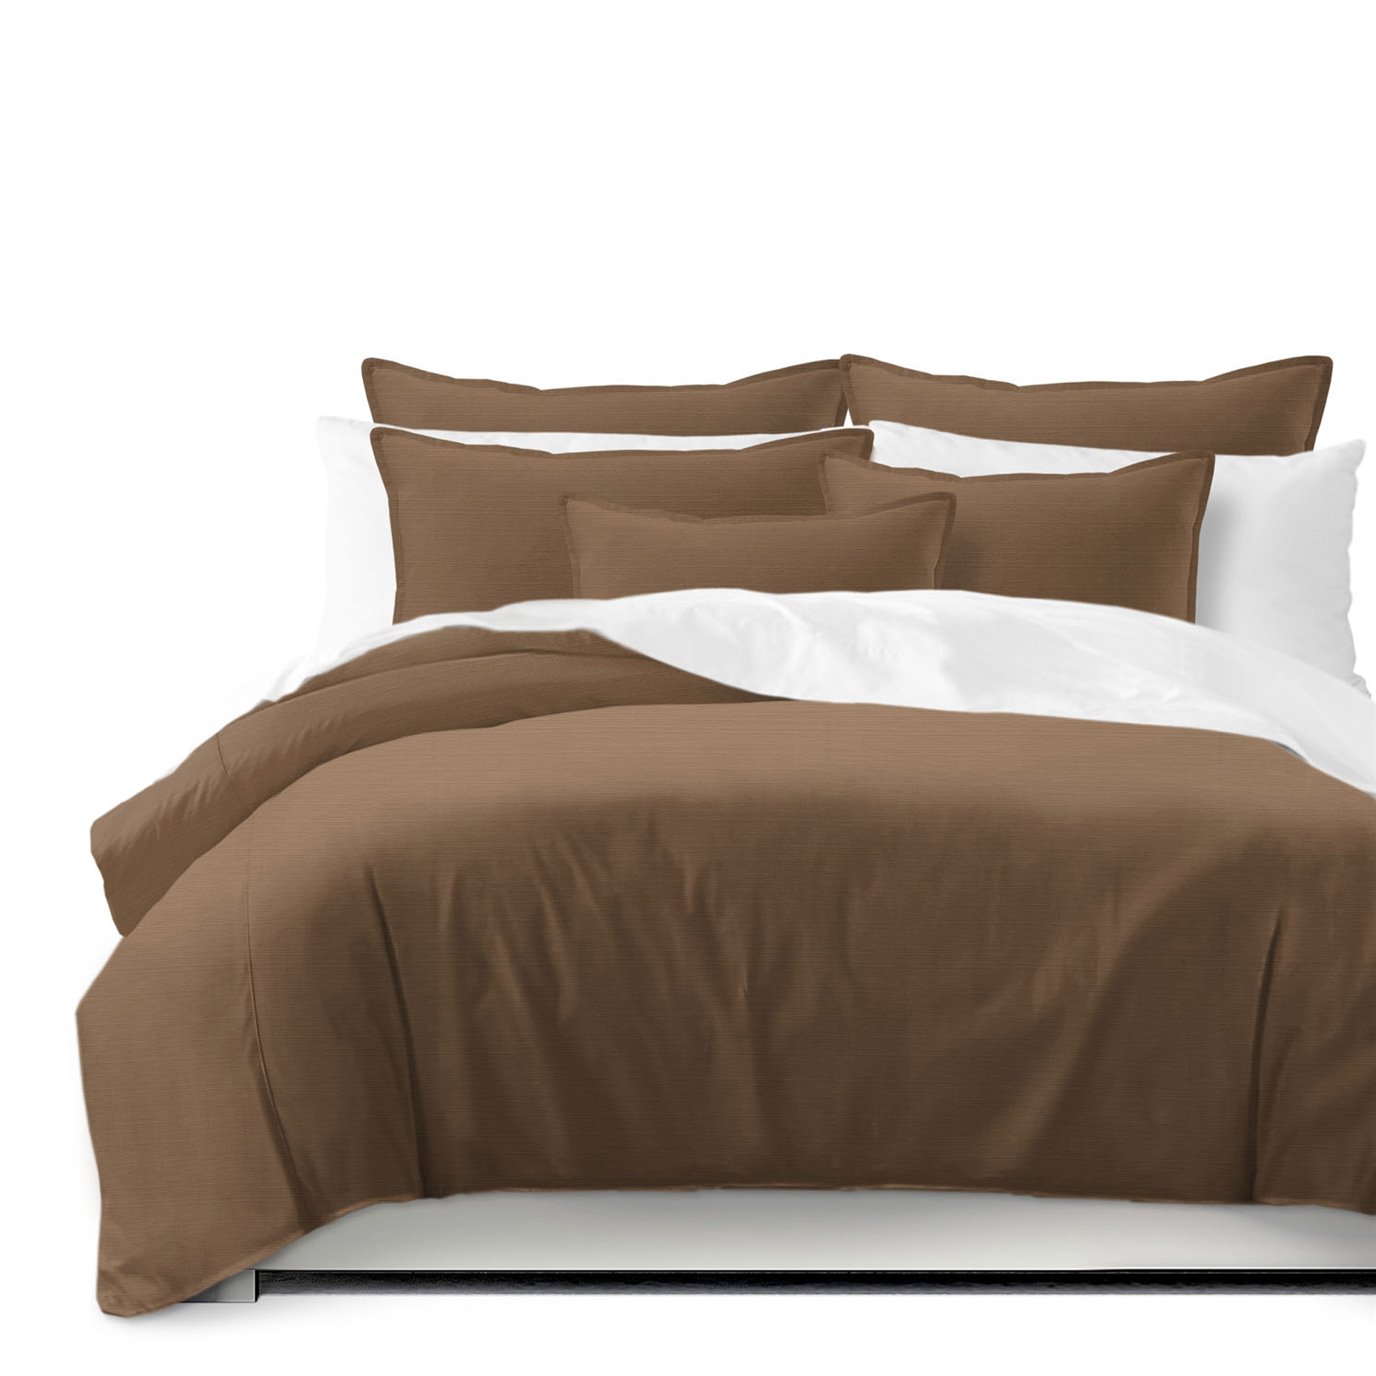 Nova Walnut Duvet Cover and Pillow Sham(s) Set - Size Full